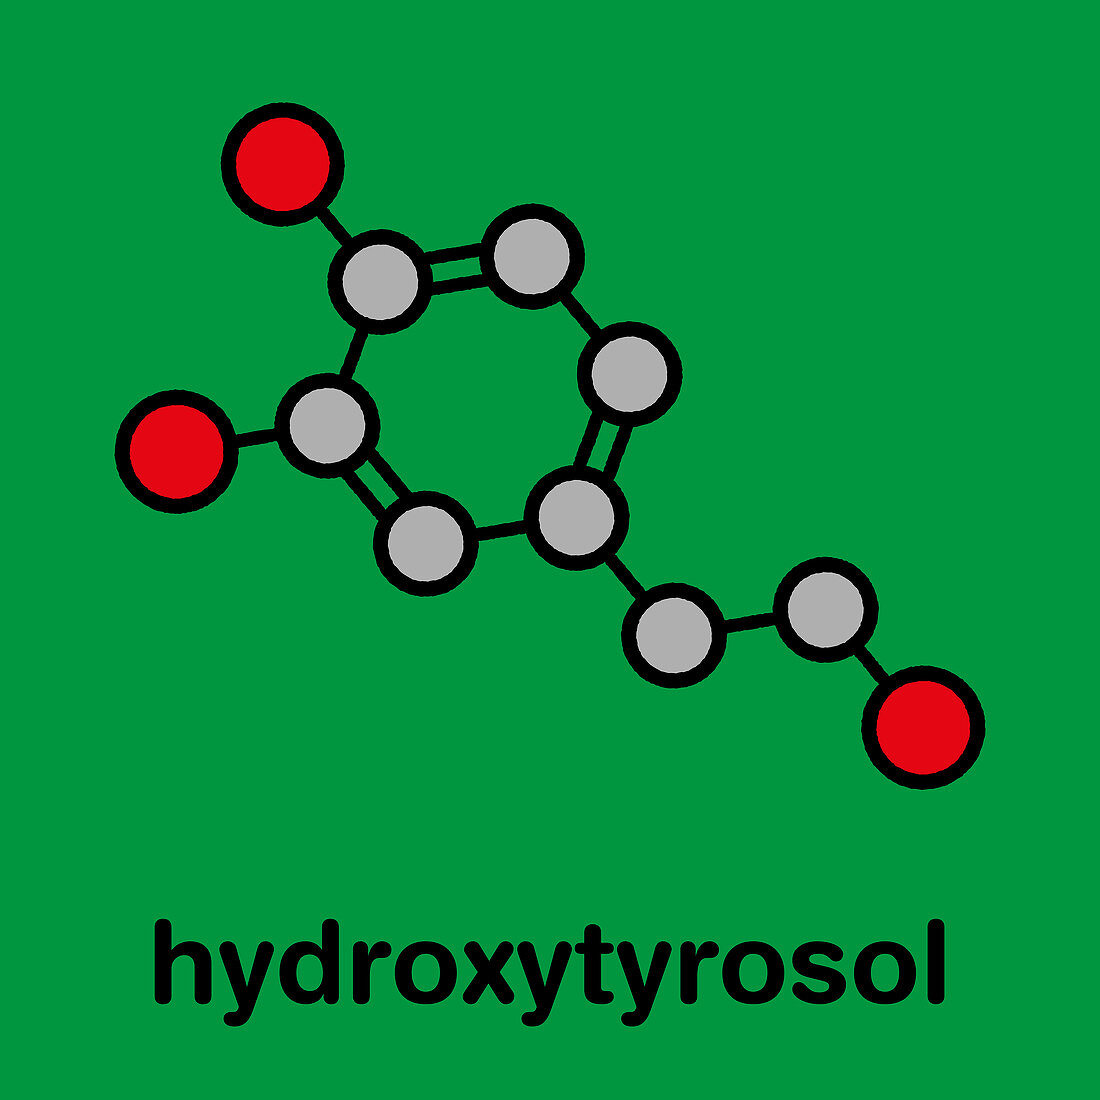 Hydroxytyrosol olive oil antioxidant molecule, illustration